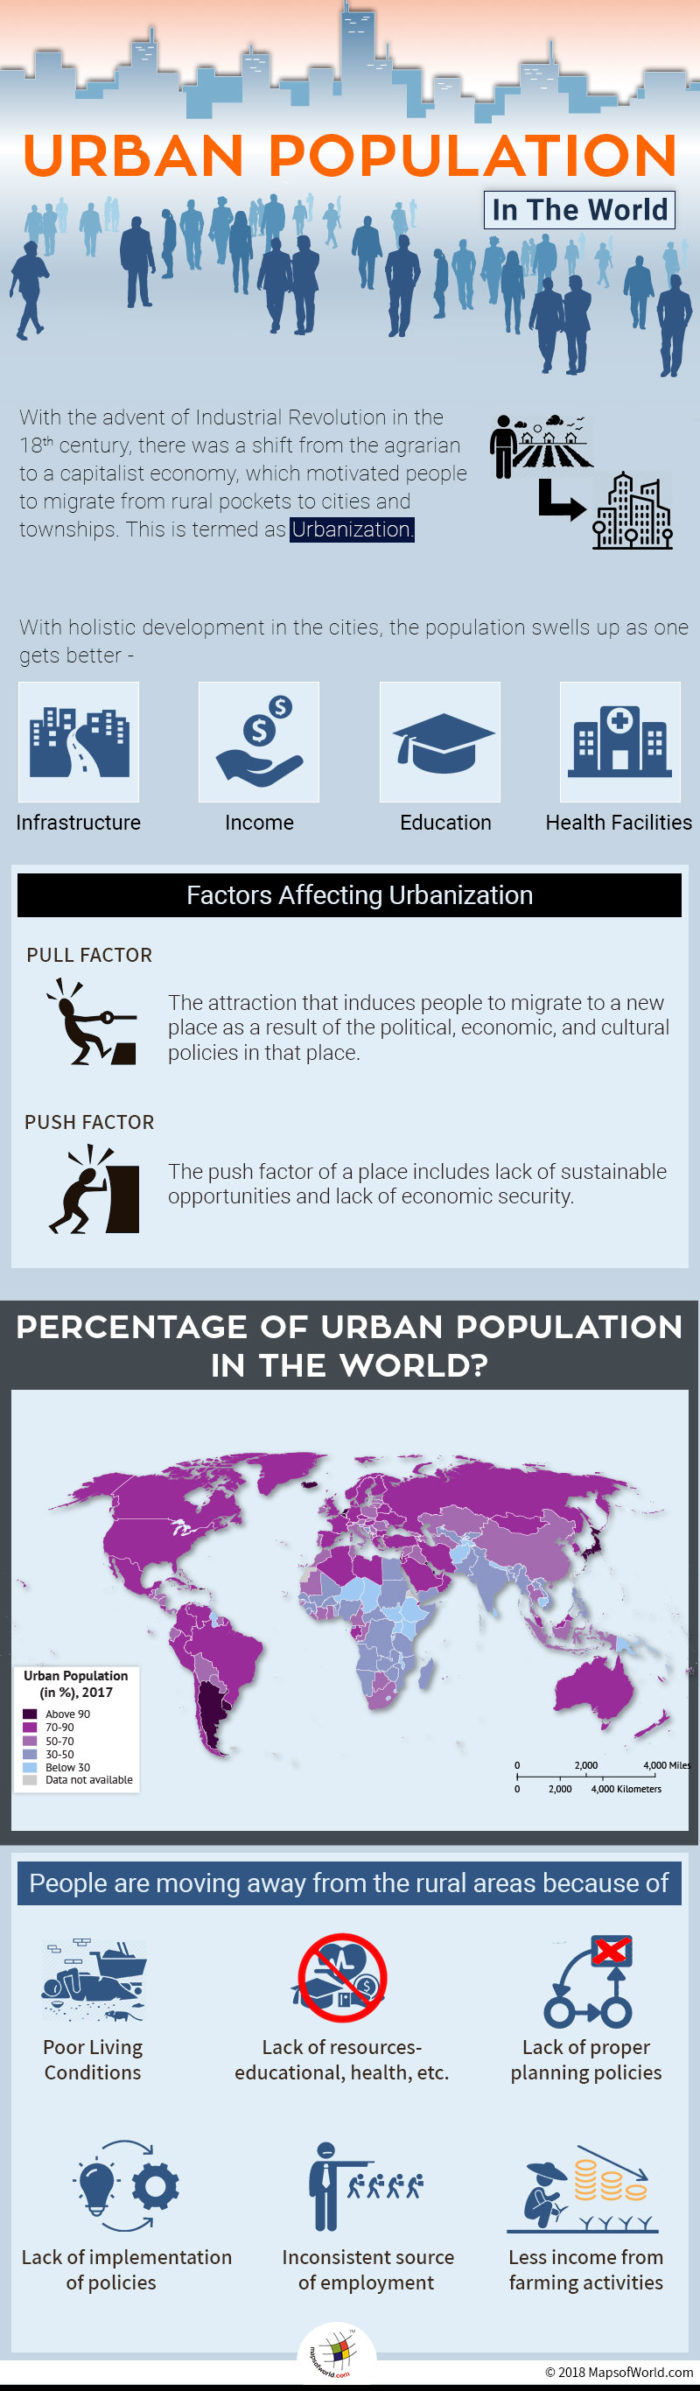 Infographic elaborating Global Urban Population